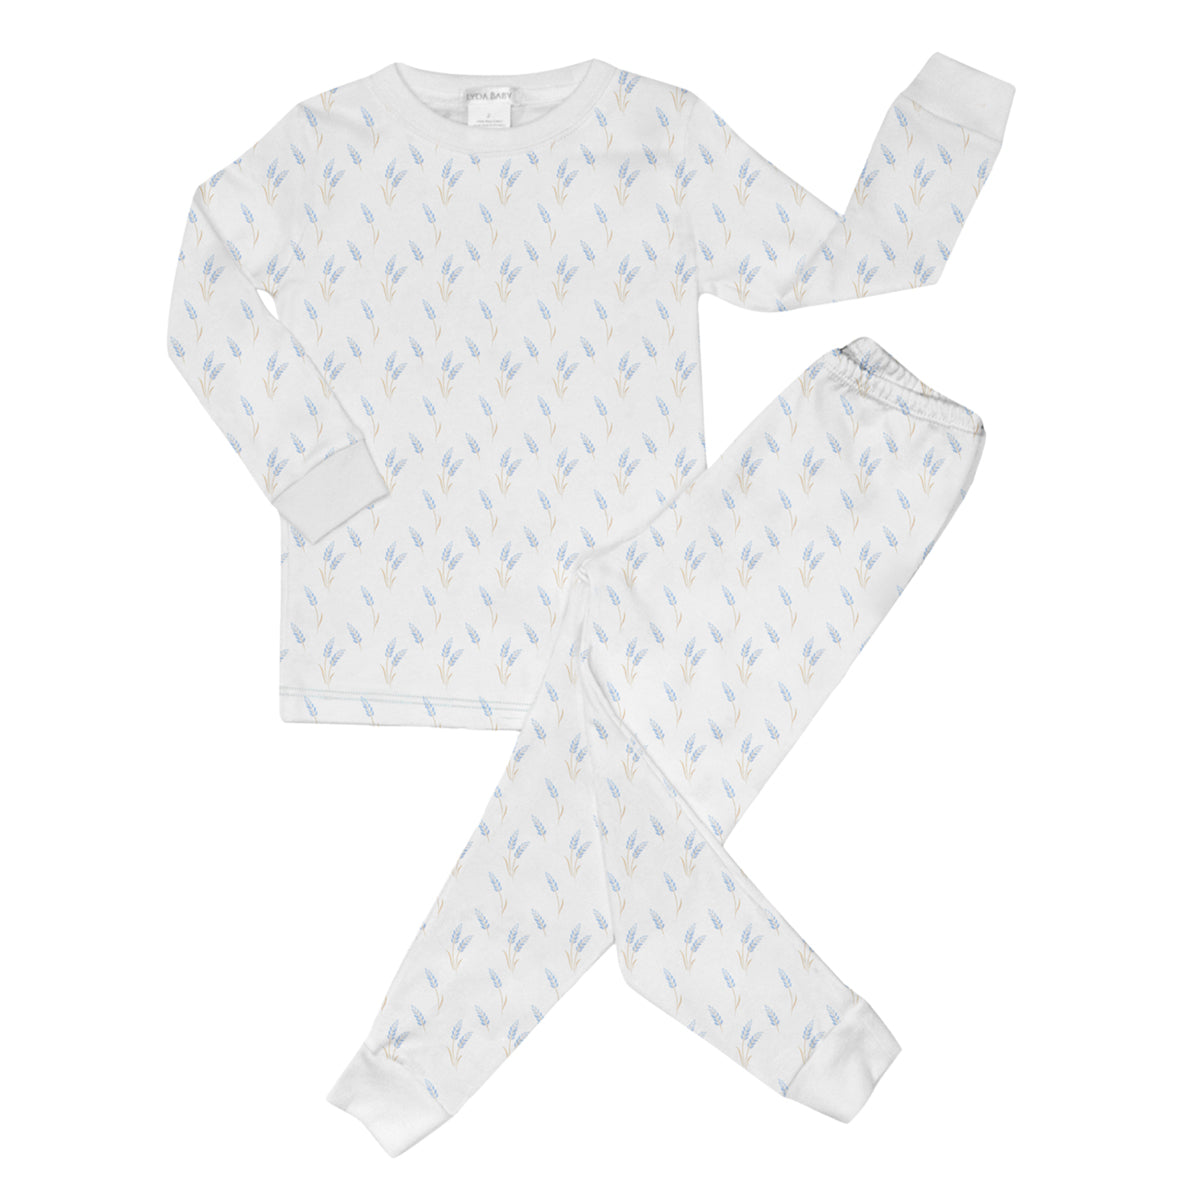 Wheat Spikes Printed Pajama | Unisex